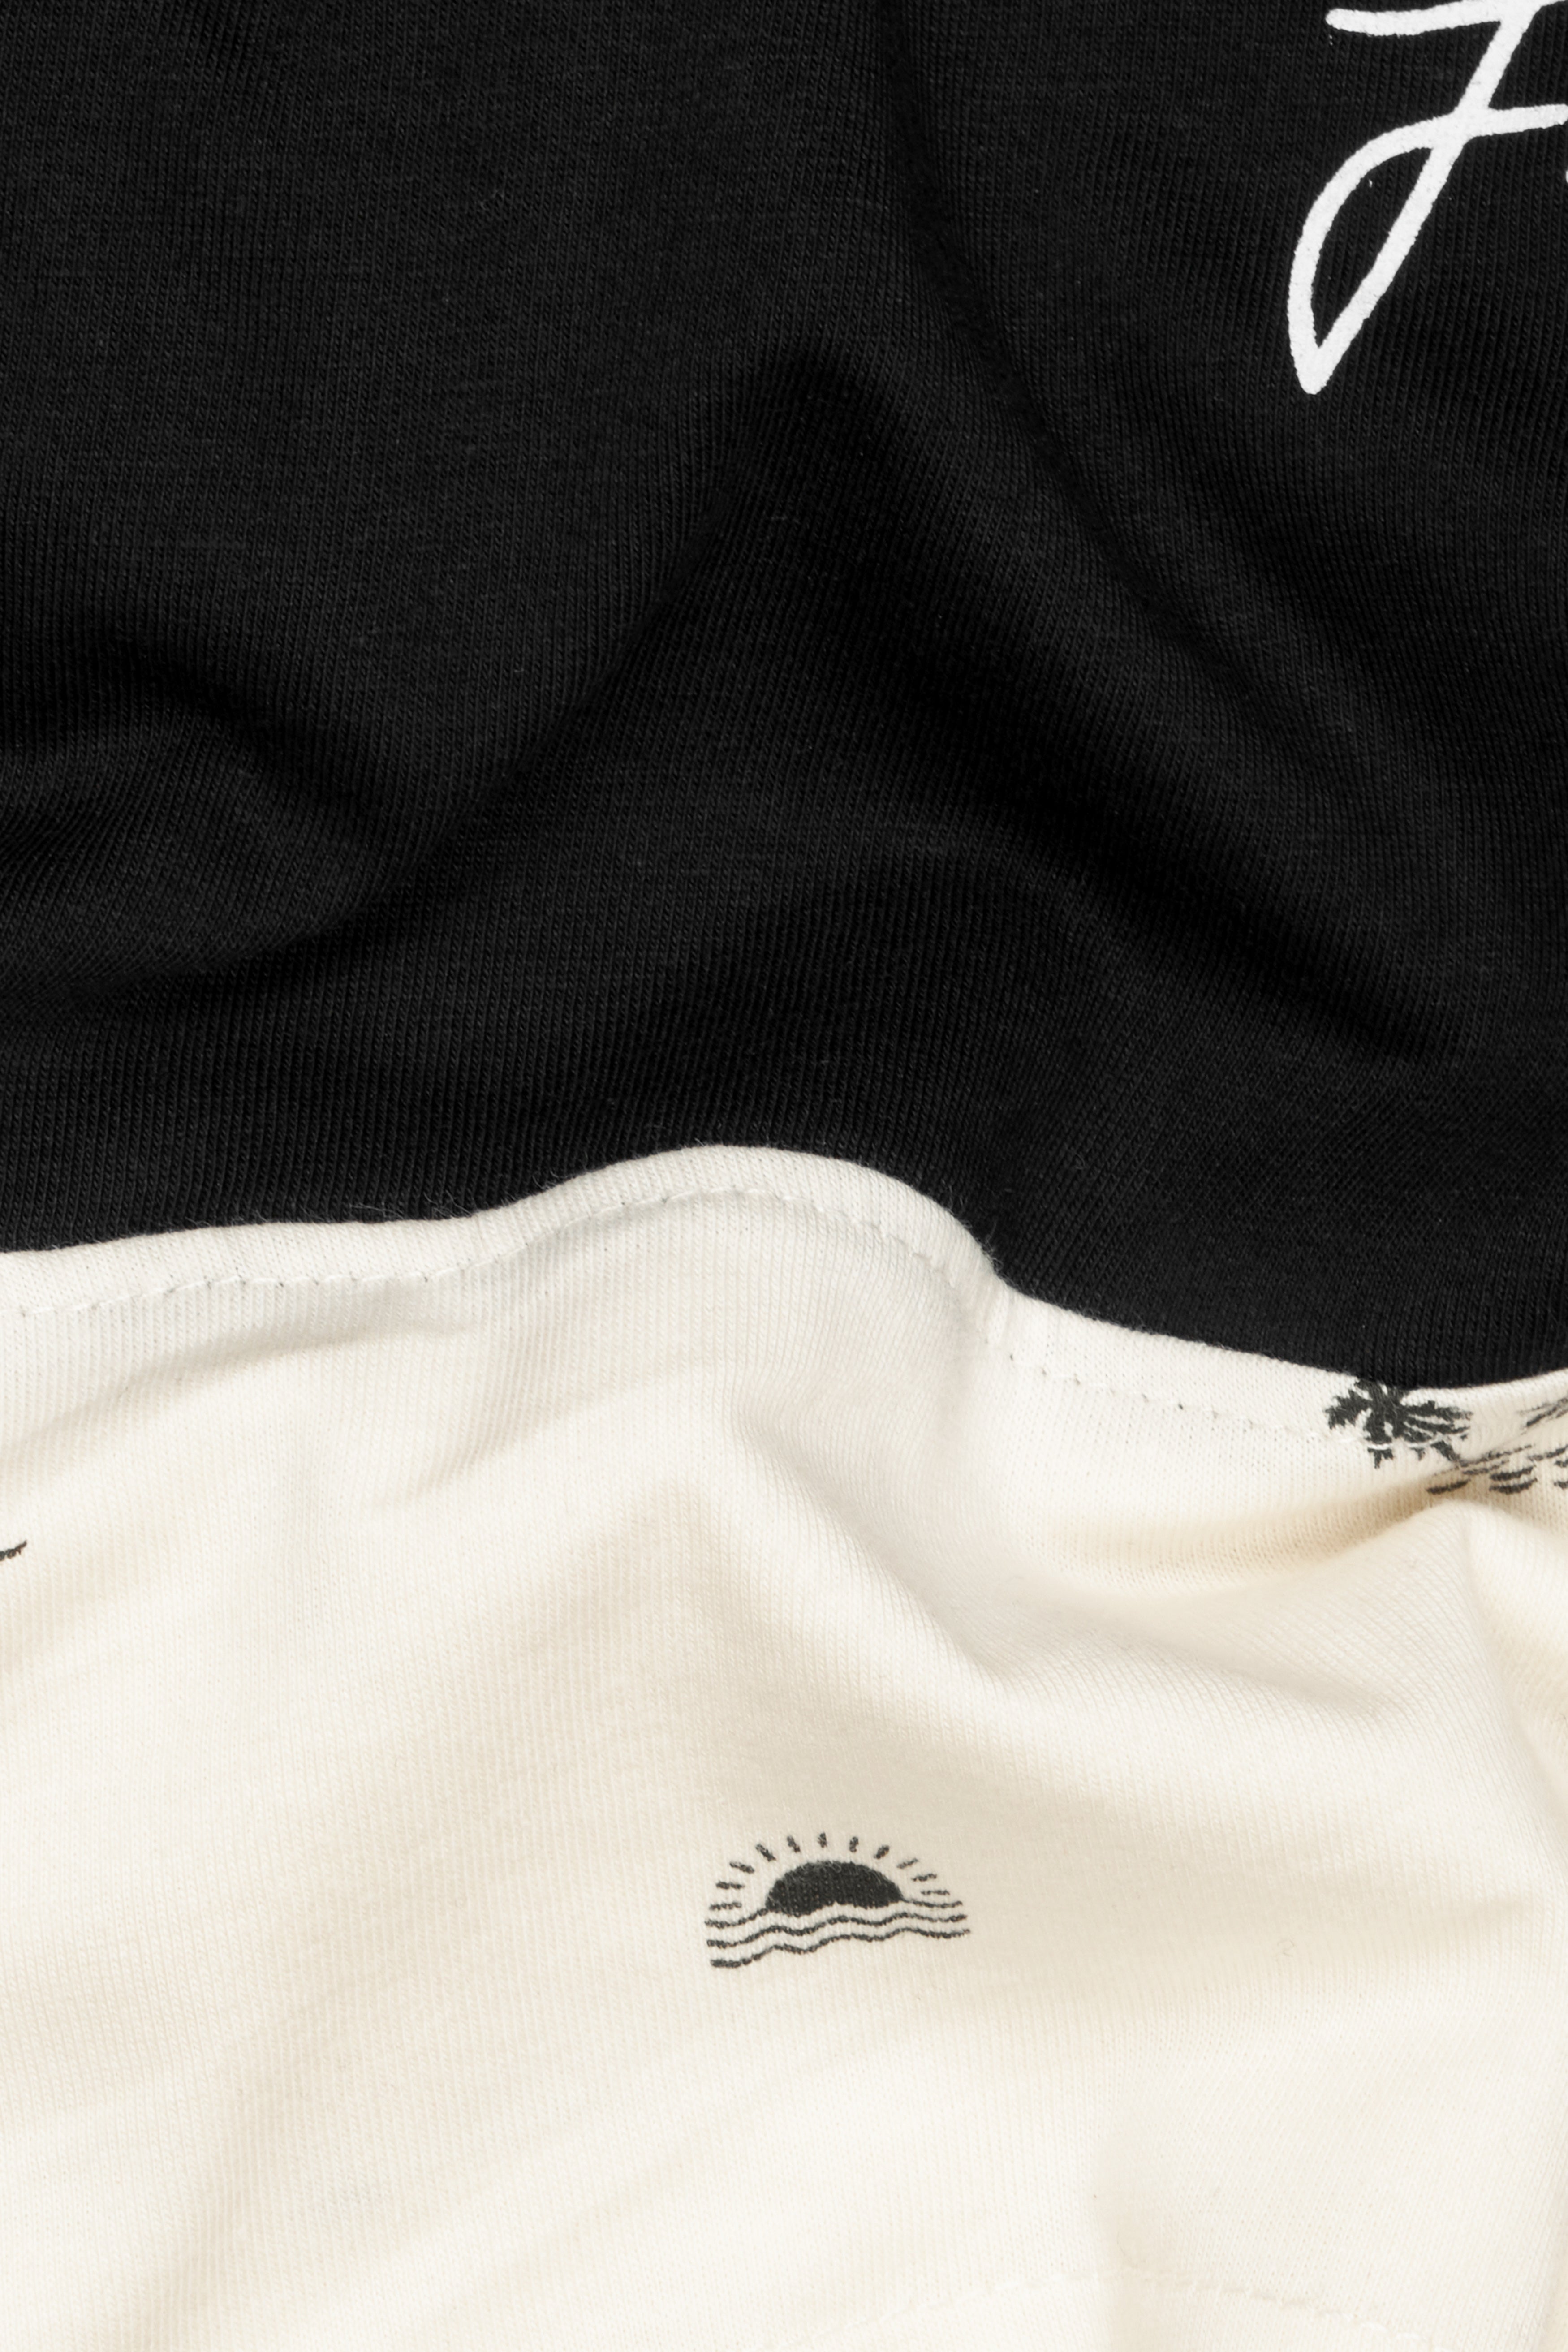 Jade Black and Merino Off White Premium Cotton T-Shirt TS905-S, TS905-M, TS905-L, TS905-XL, TS905-XXL